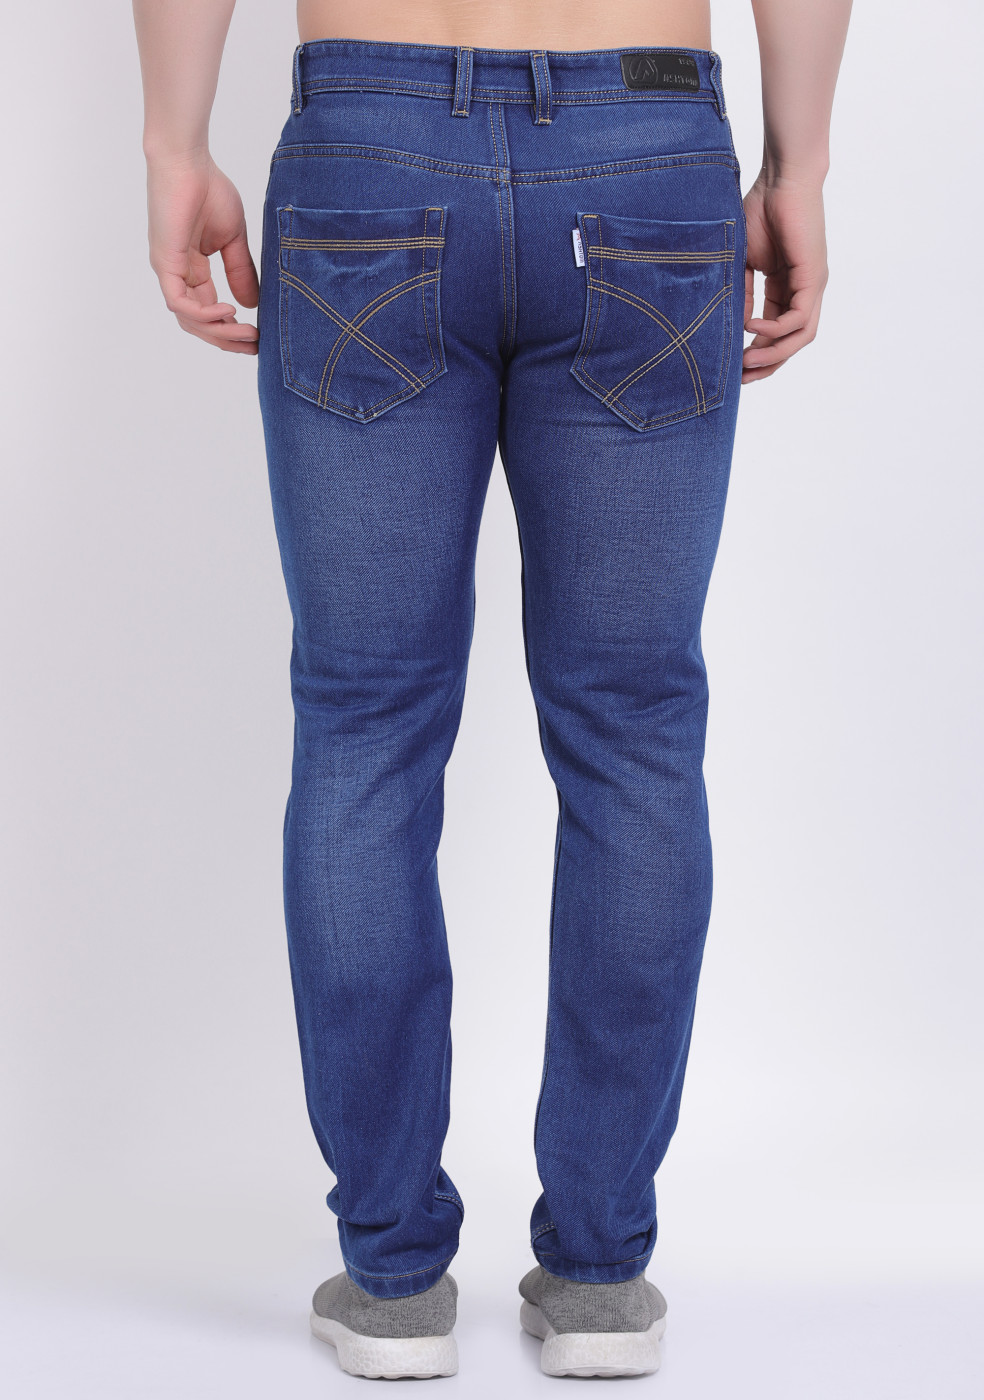 Stretchable Cotton Jeans For Men